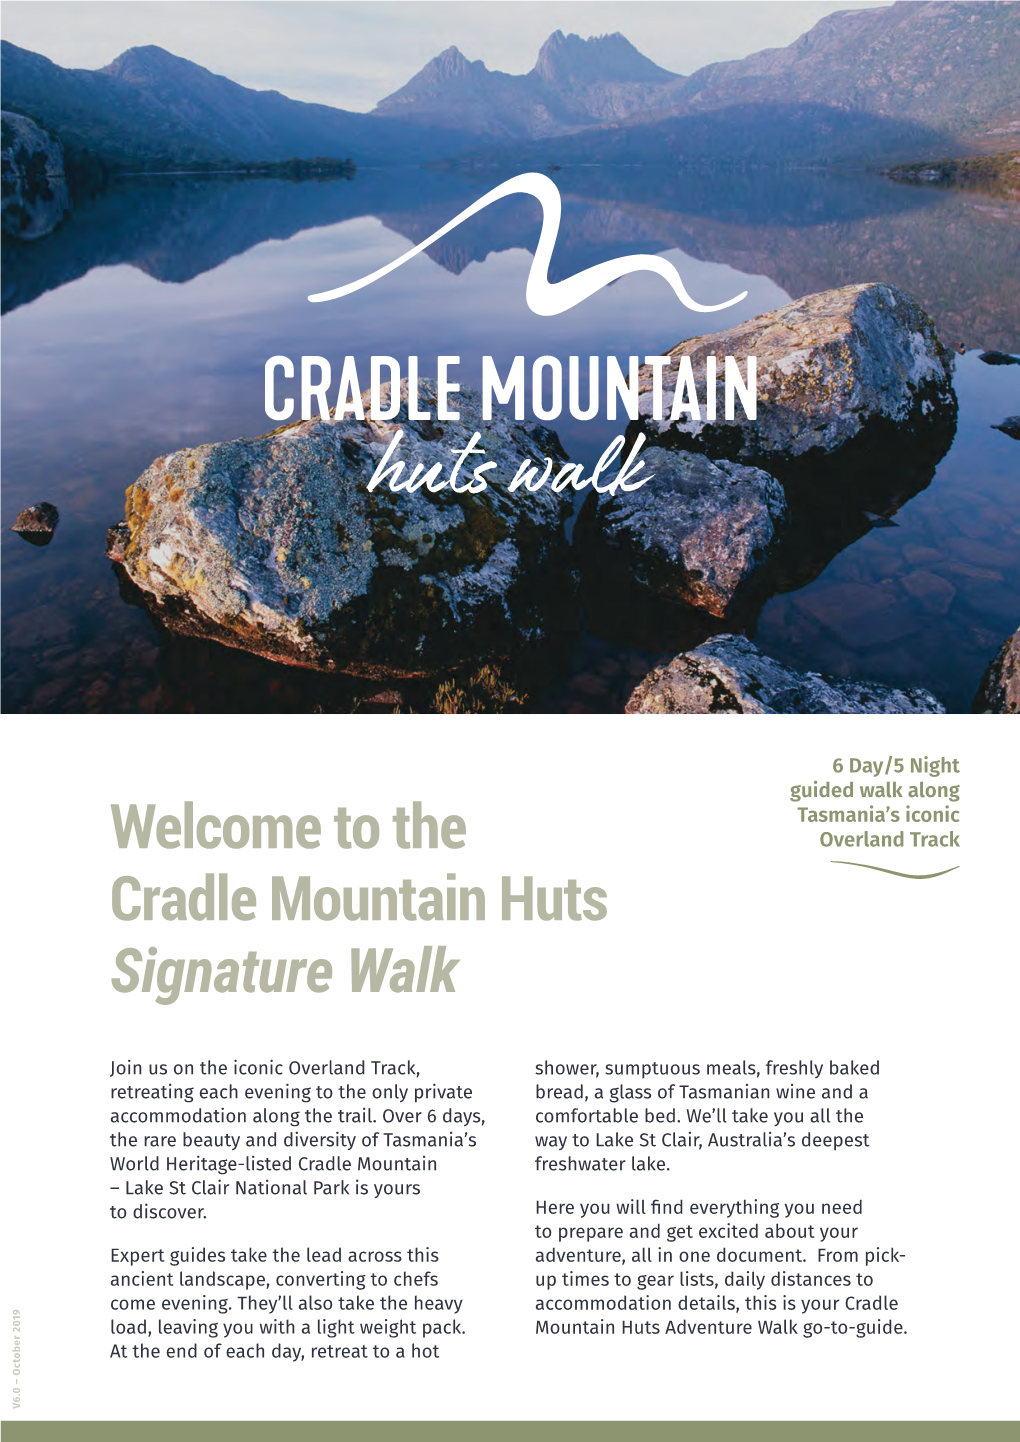 The Cradle Mountain Huts Signature Walk